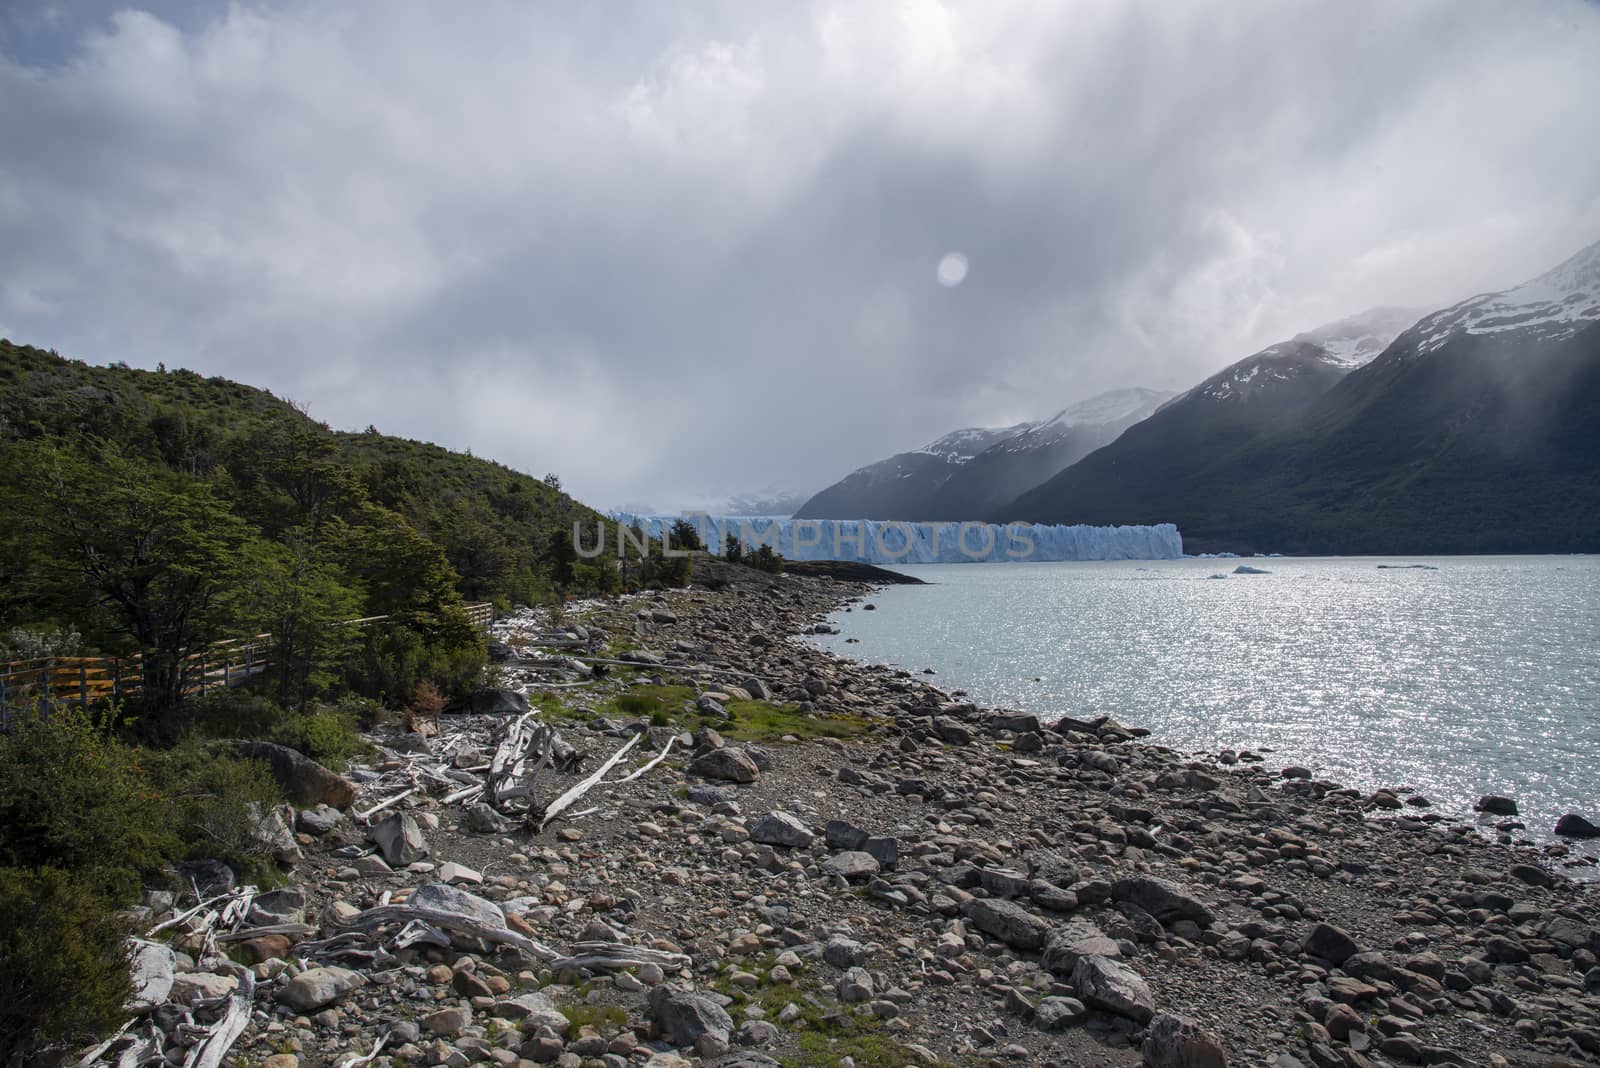 The Perito Moreno Glacier, El Calafate, Argentina